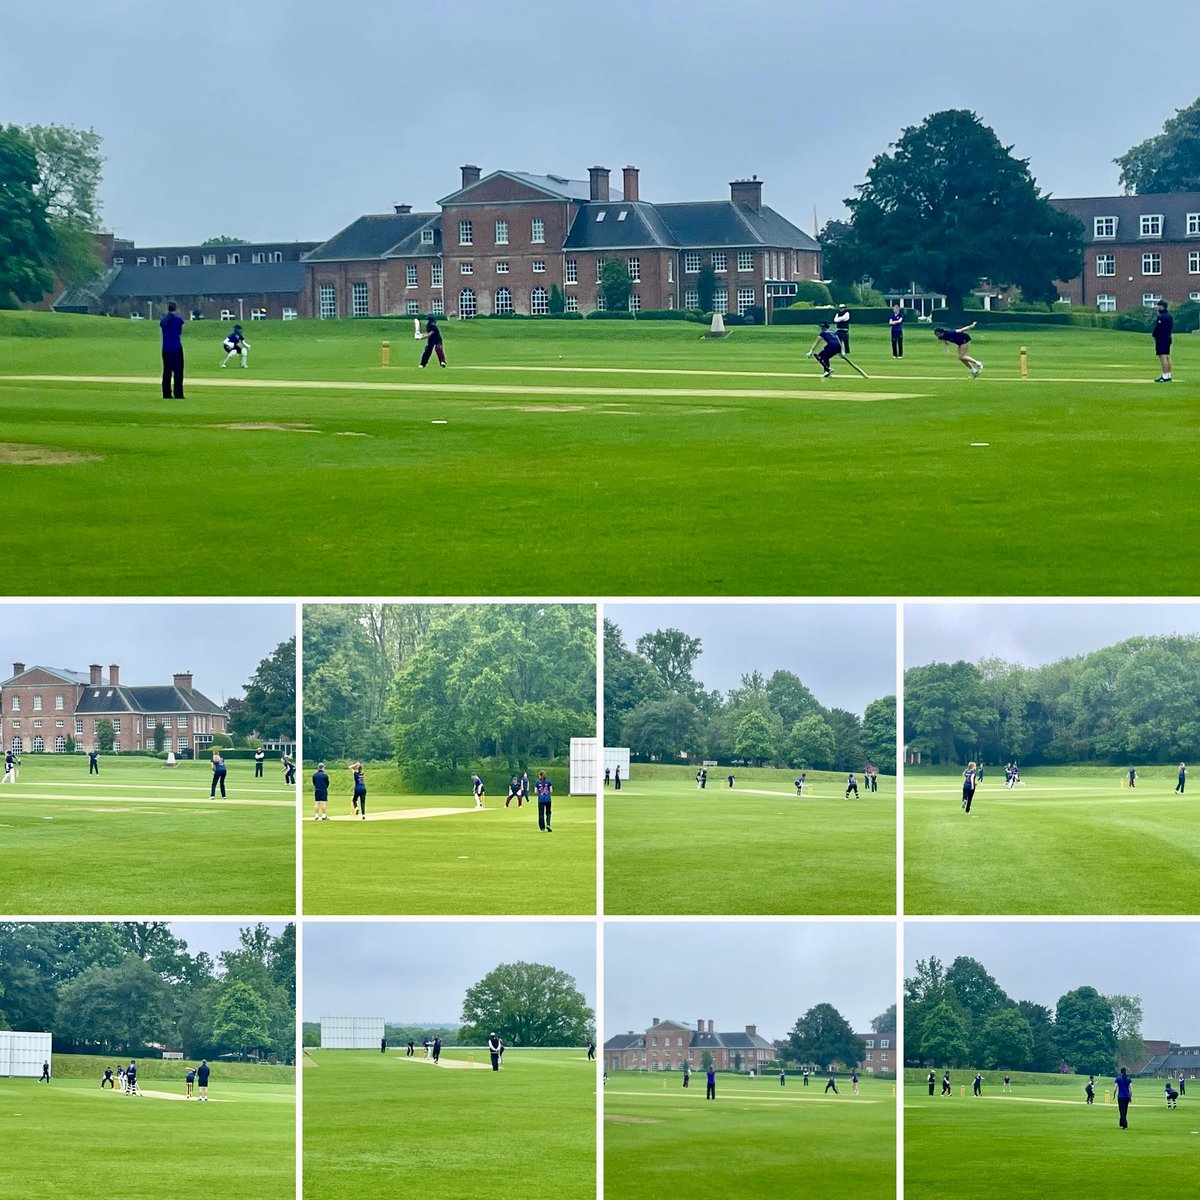 A wonderful but 💦💦 afternoon of U15 @CricketPaper100 - well played @HaileyburyUK 🏏